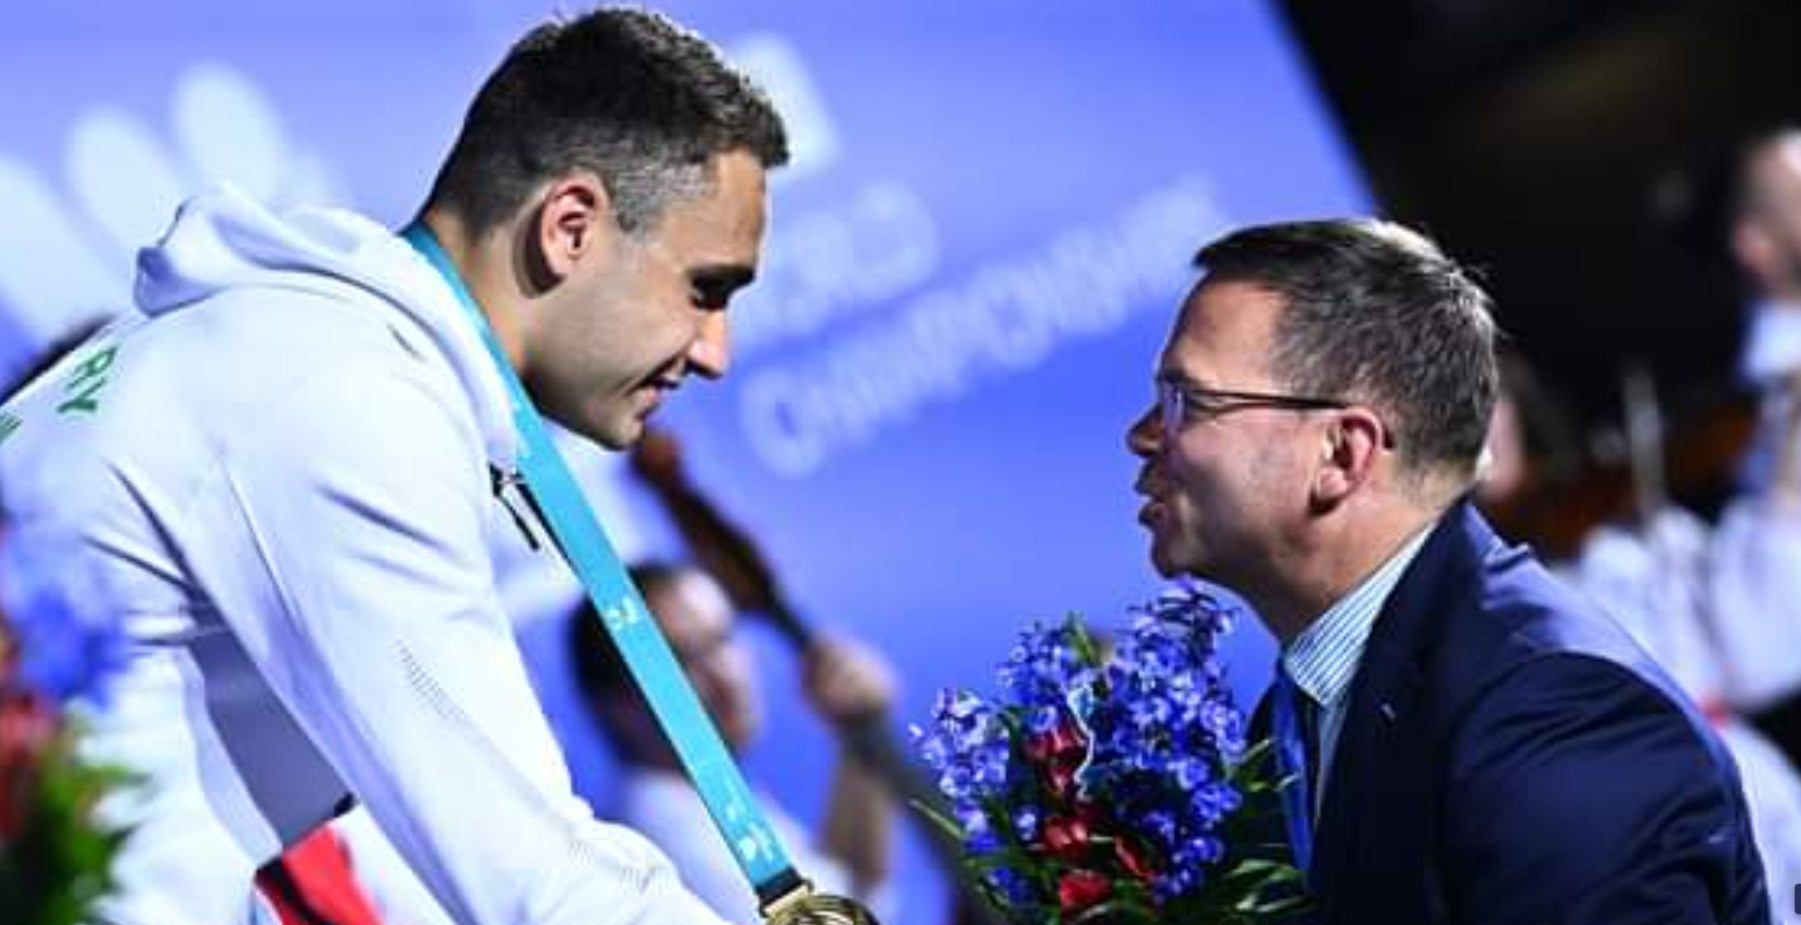 Balázs Fürjes was co-chair of the Budapest 2022 World Aquatics Championships Organising Committee ©Balázs Fürjes